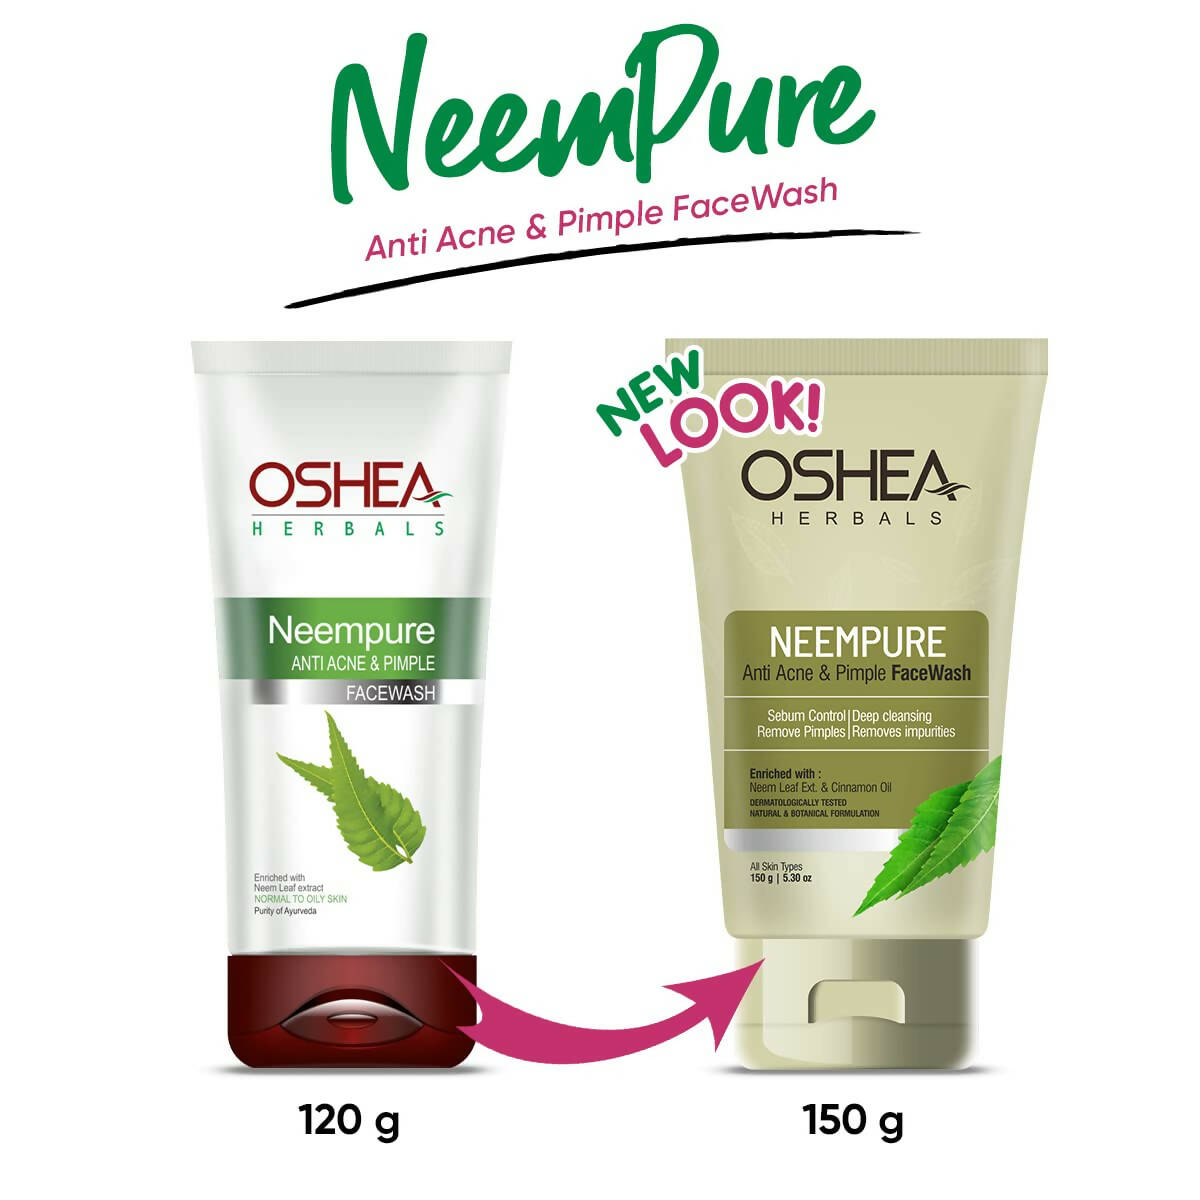 Oshea Herbals Neempure Anti Acne & Pimple Face Wash